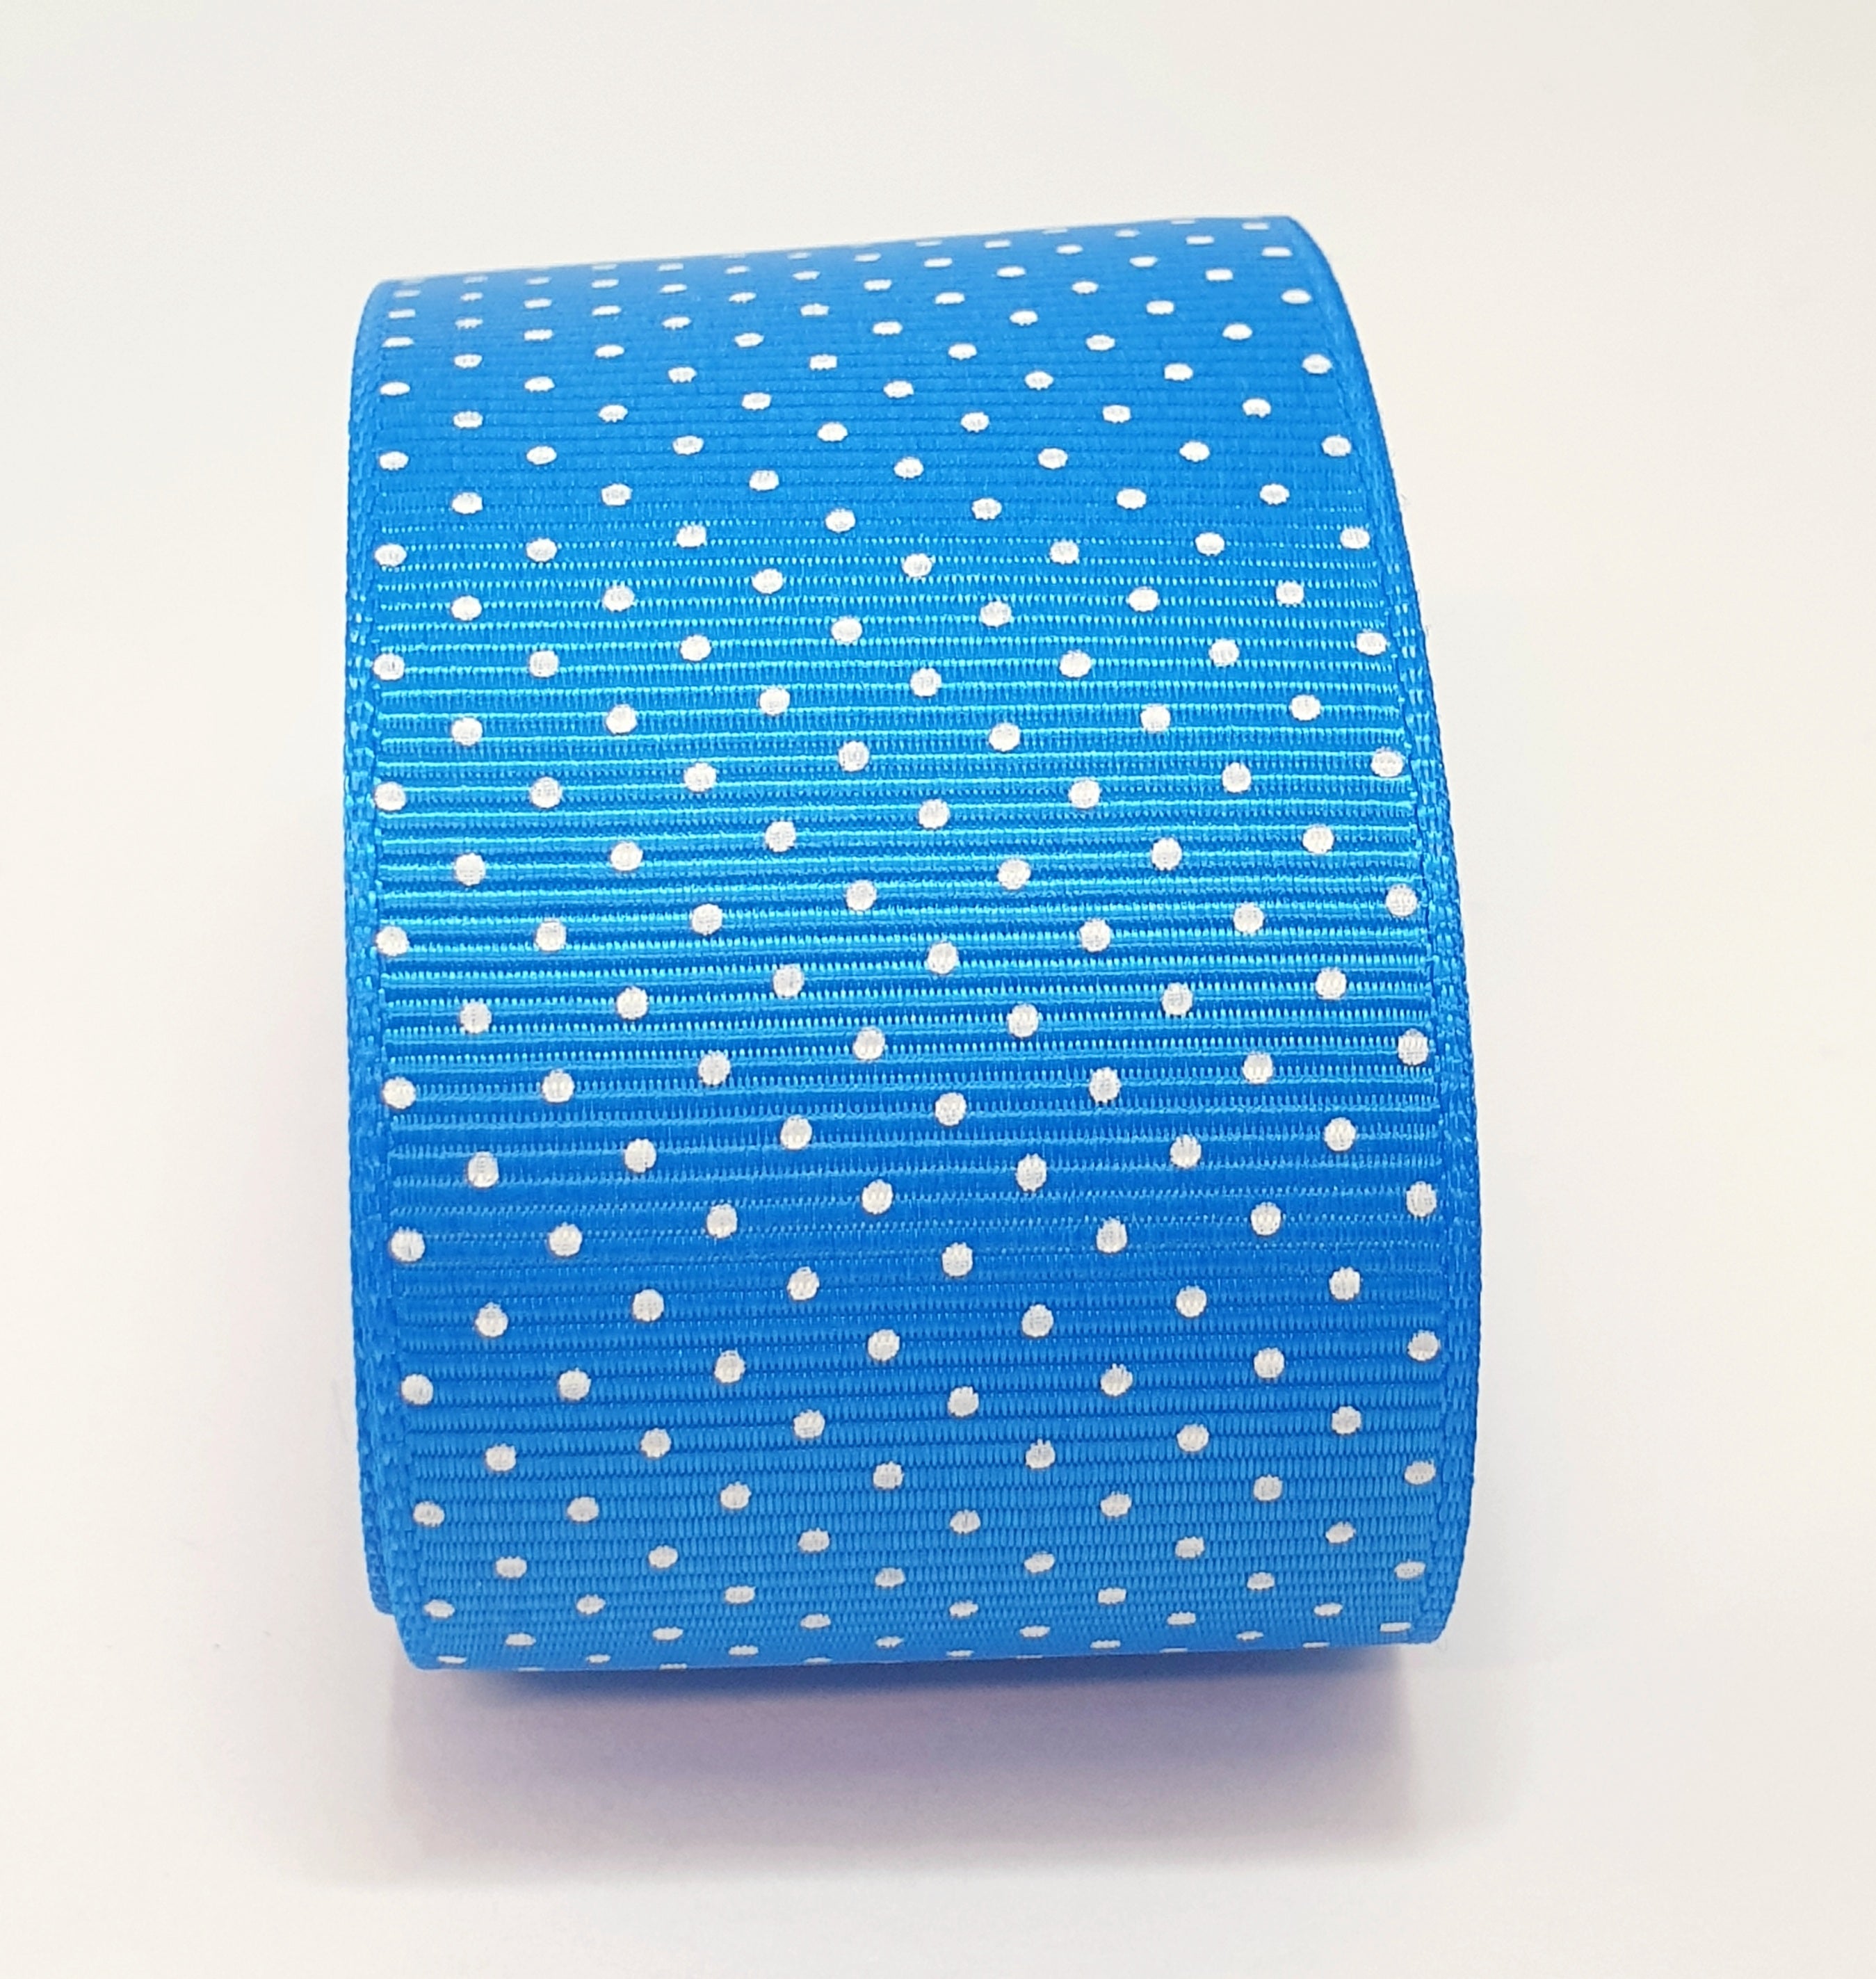 MajorCrafts 40mm 1metre Royal Blue Polka Dot Single Sided Grosgrain Fabric Ribbon